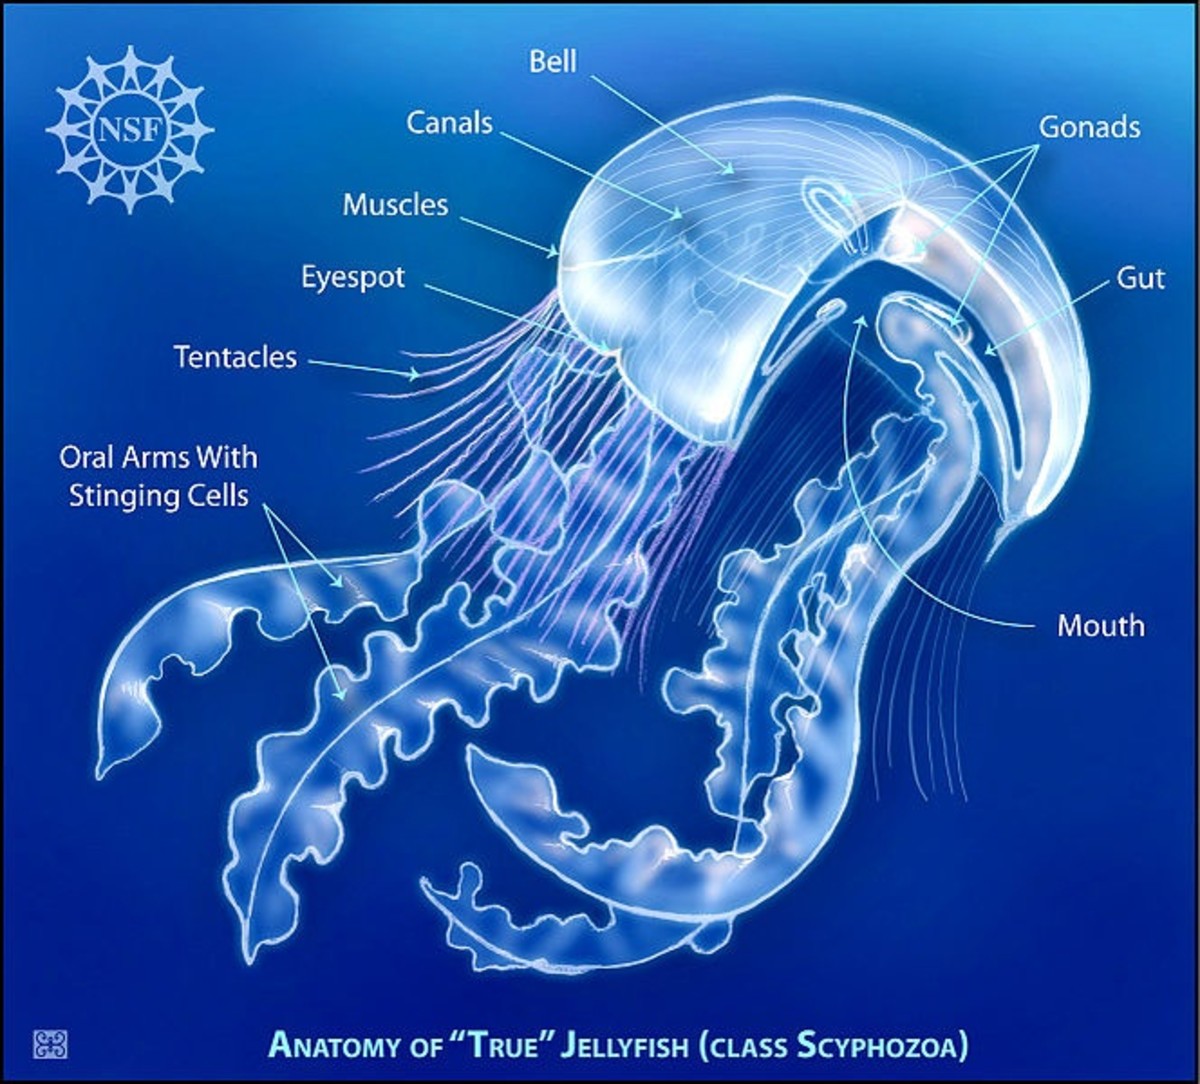 Anatomy of true jellyfish (class Scyphozoa)